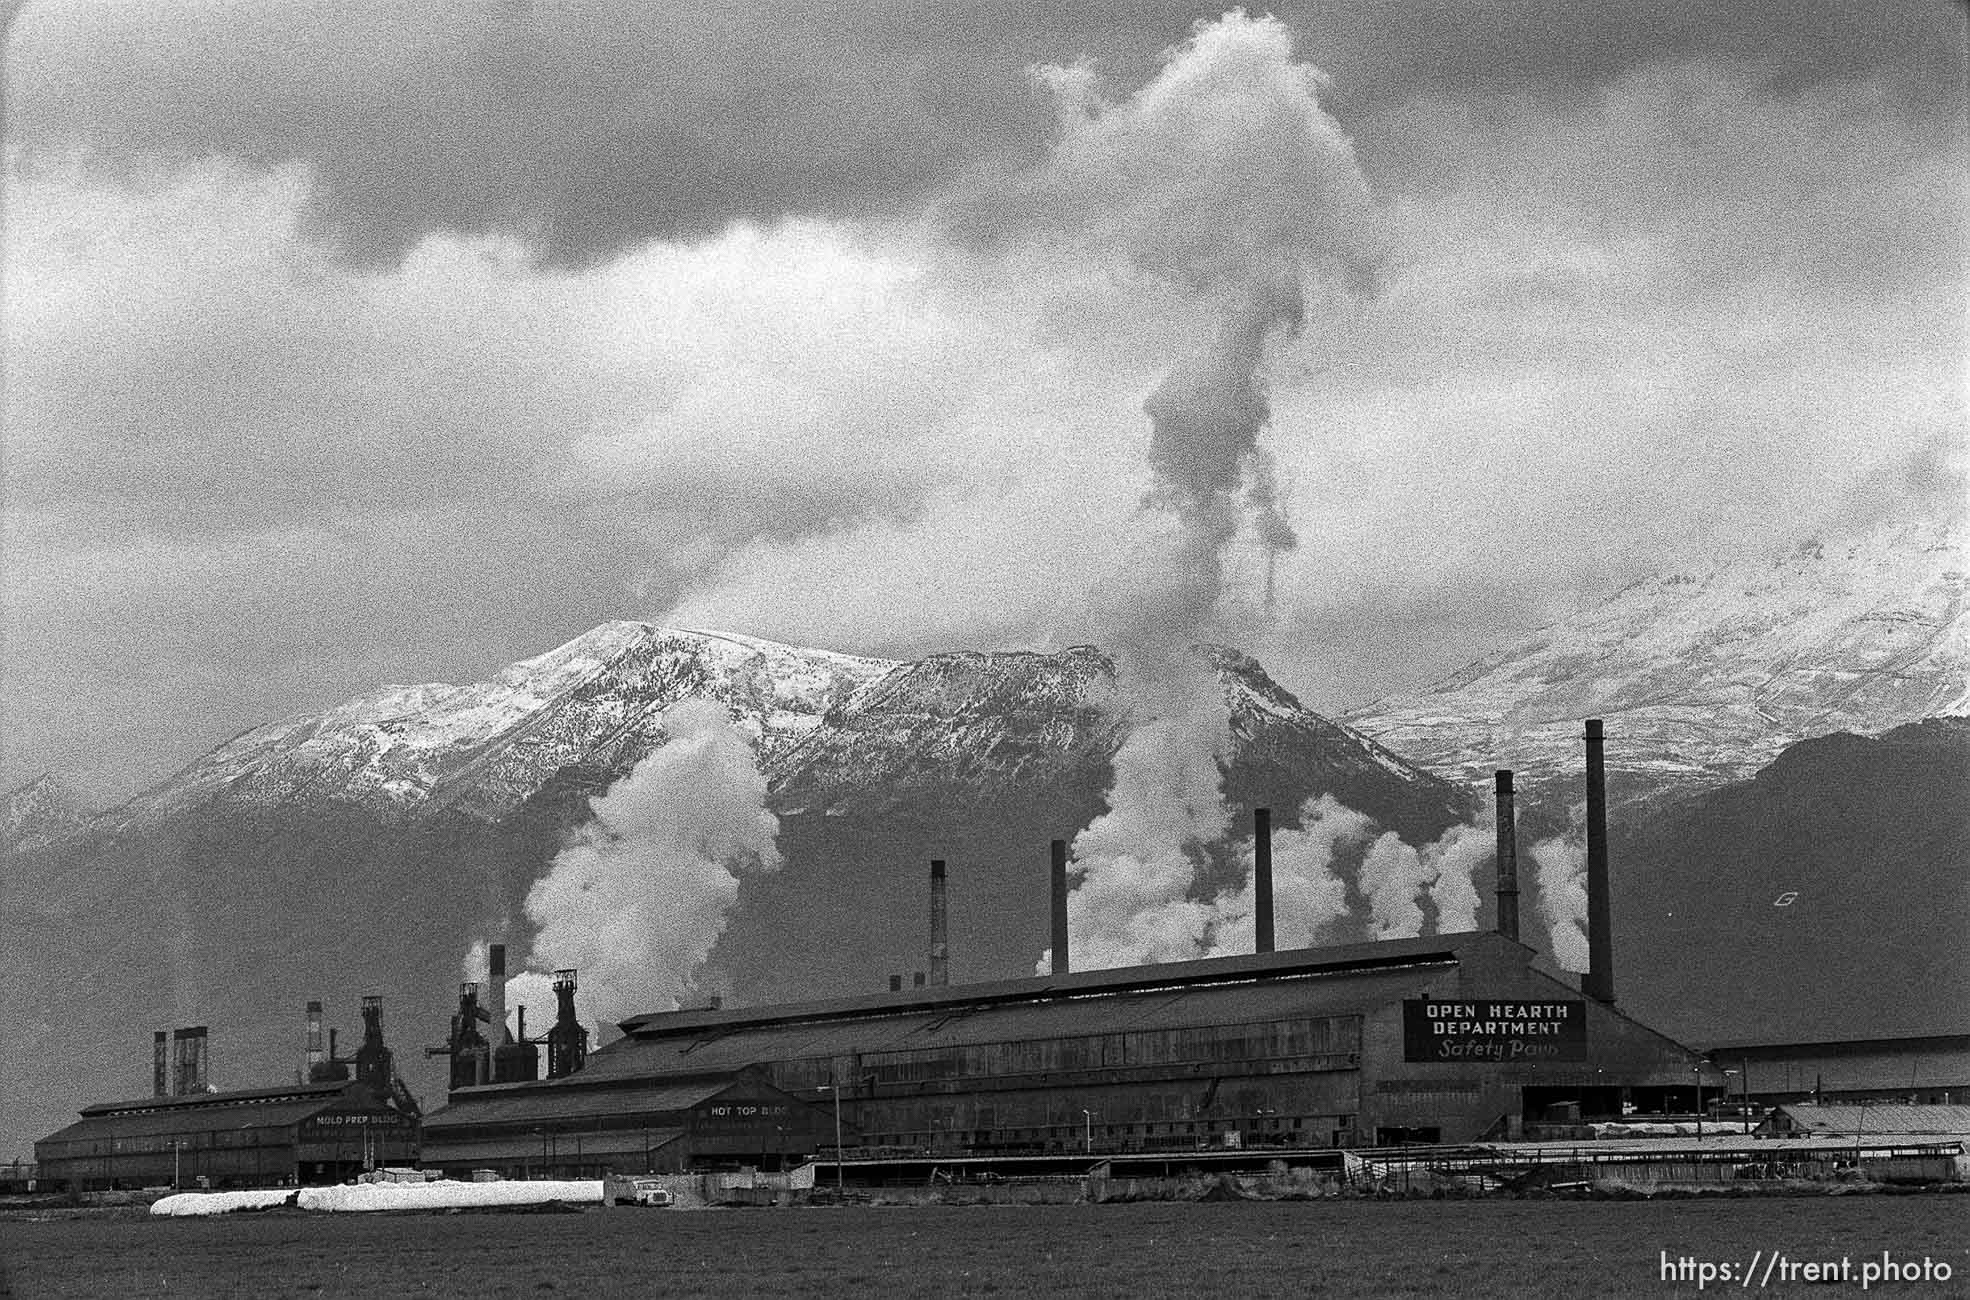 Geneva Steel